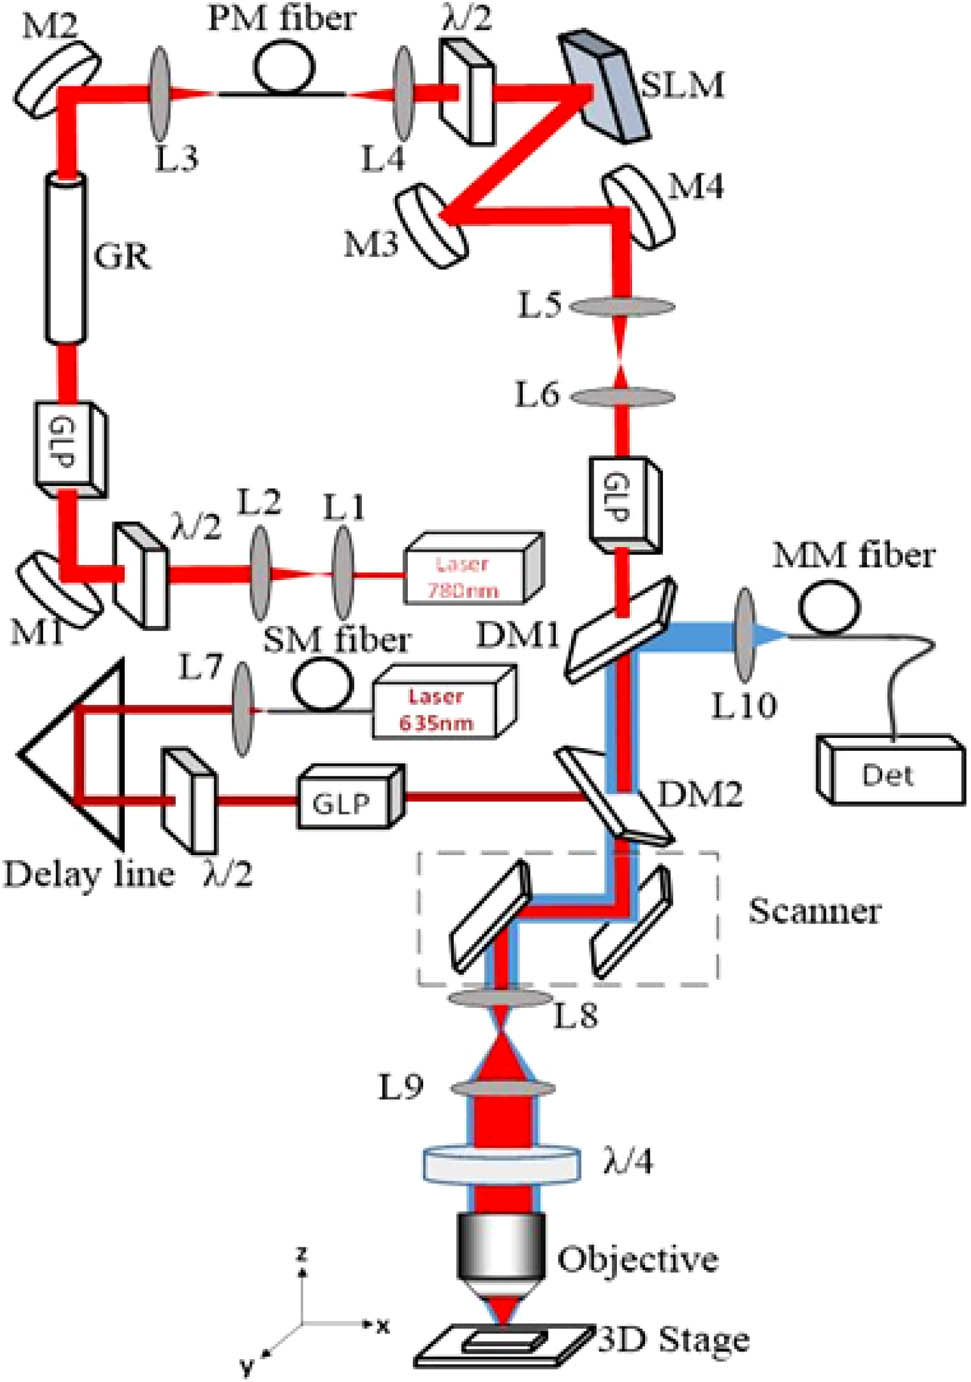 Schematic of the COAT-STED microscope. L, lens; GLP, Glan laser polarizer; M, mirrors; DM1 (T: 720–1200 nm, R: 350–720 nm), DM2 (T: 650–800 nm, R: 600–650 nm): dichroic mirrors; GR, glass rod; λ/2, half-wave plate; λ/4, quarter-wave plate; Det, PMT or CCD; SM fiber, single mode fiber; PM fiber, polarization maintaining fiber; MM fiber, multimode fiber.